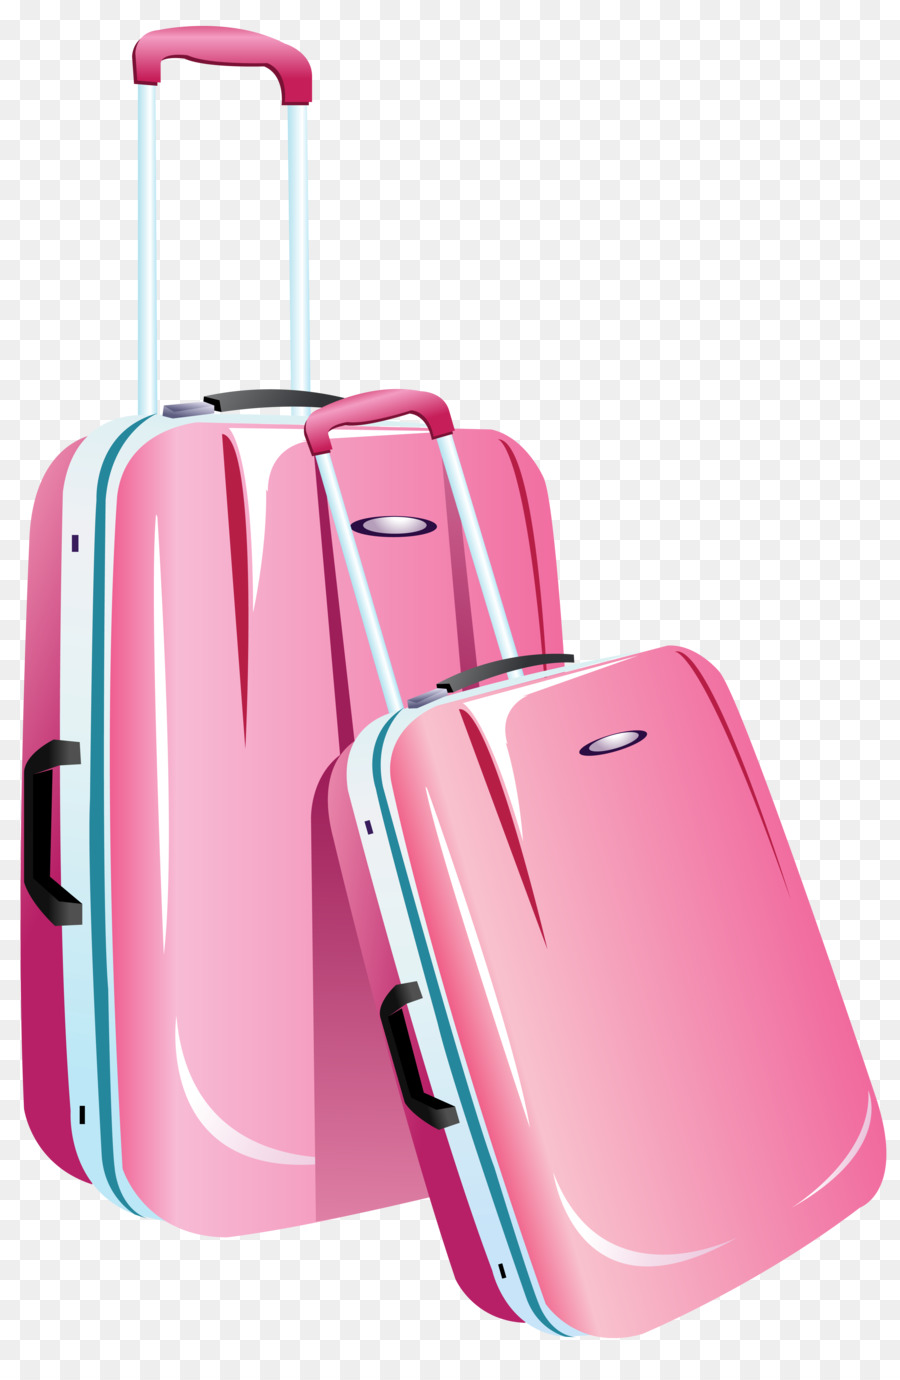 Baggage Travel Clip art - suitcase png download - 4164*6309 - Free Transparent Bag png Download.